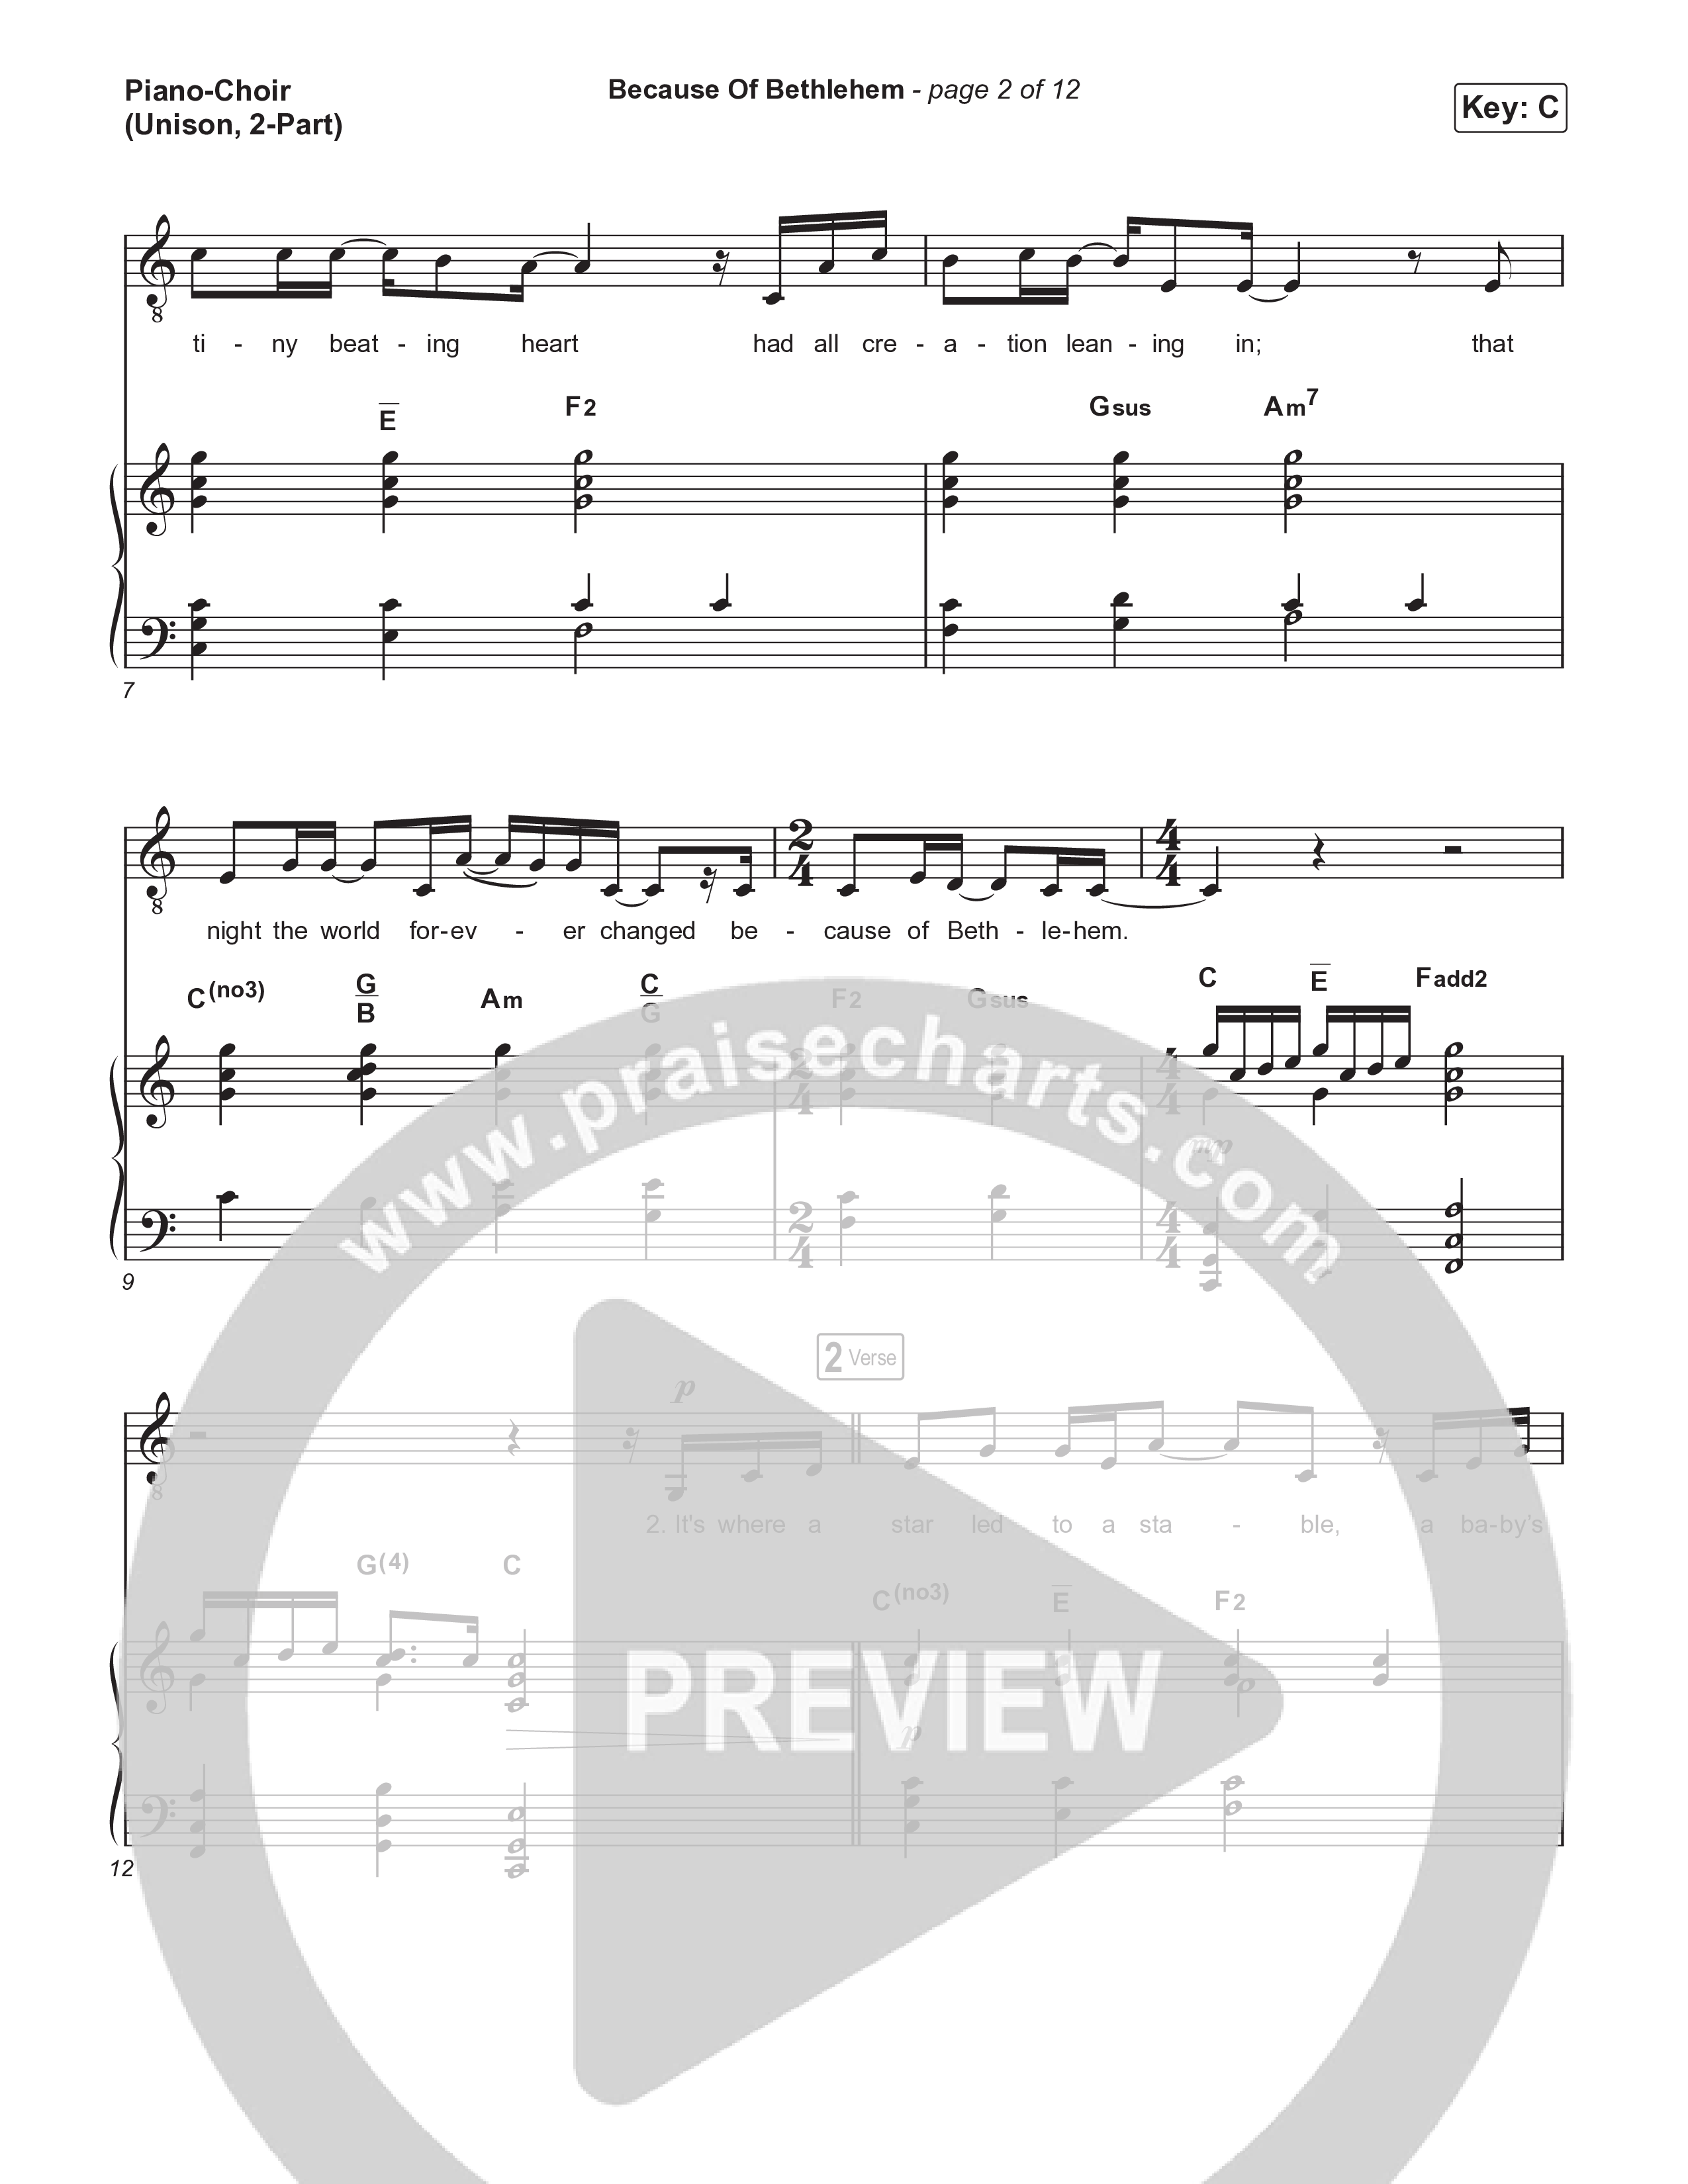 Because Of Bethlehem (Unison/2-Part) Piano/Choir  (Uni/2-Part) (Matthew West / Arr. Luke Gambill)